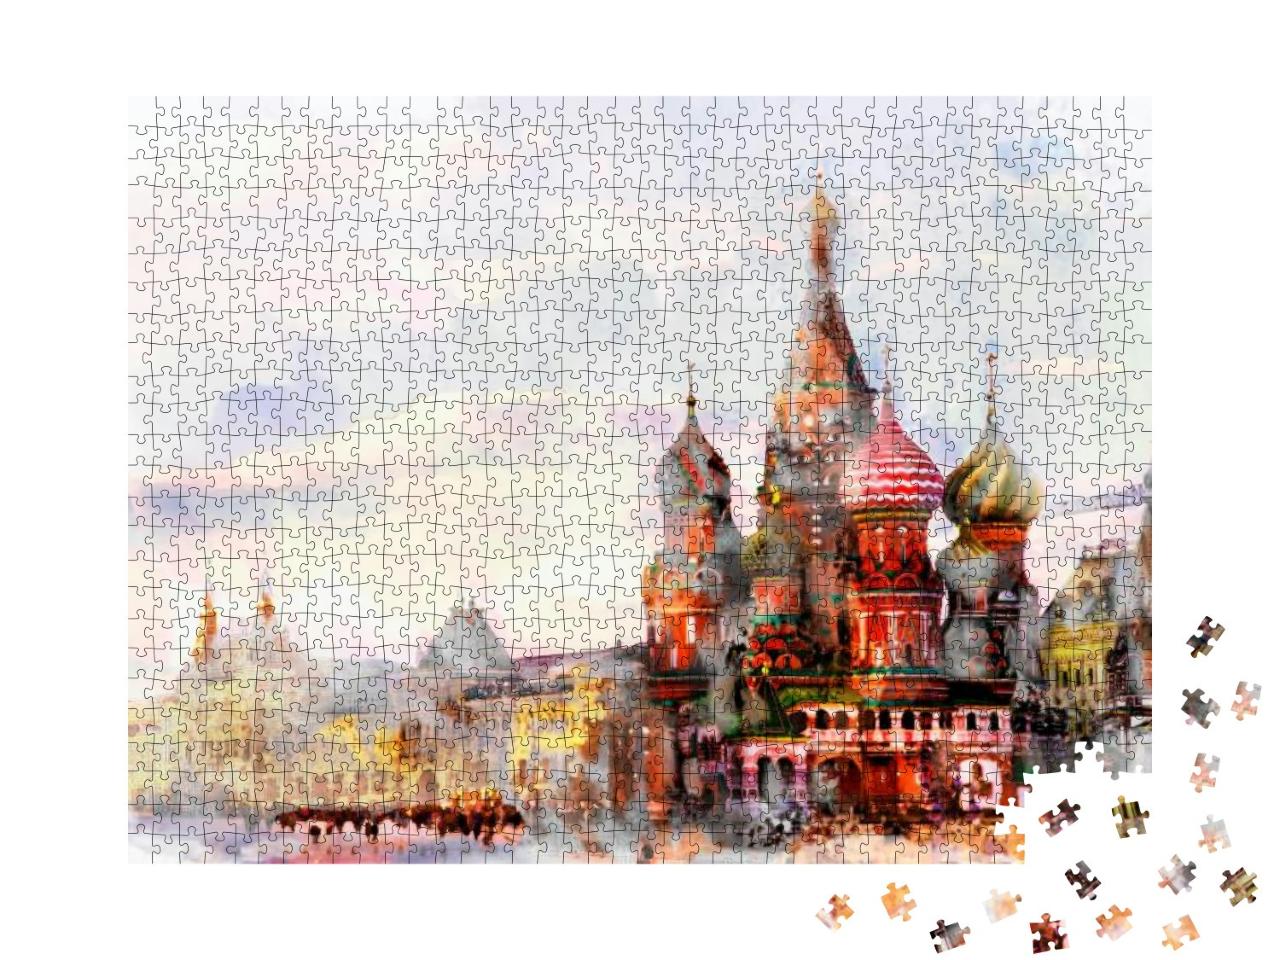 Puzzle 1000 Teile „Aquarell von Moskau bei Sonnenuntergang“